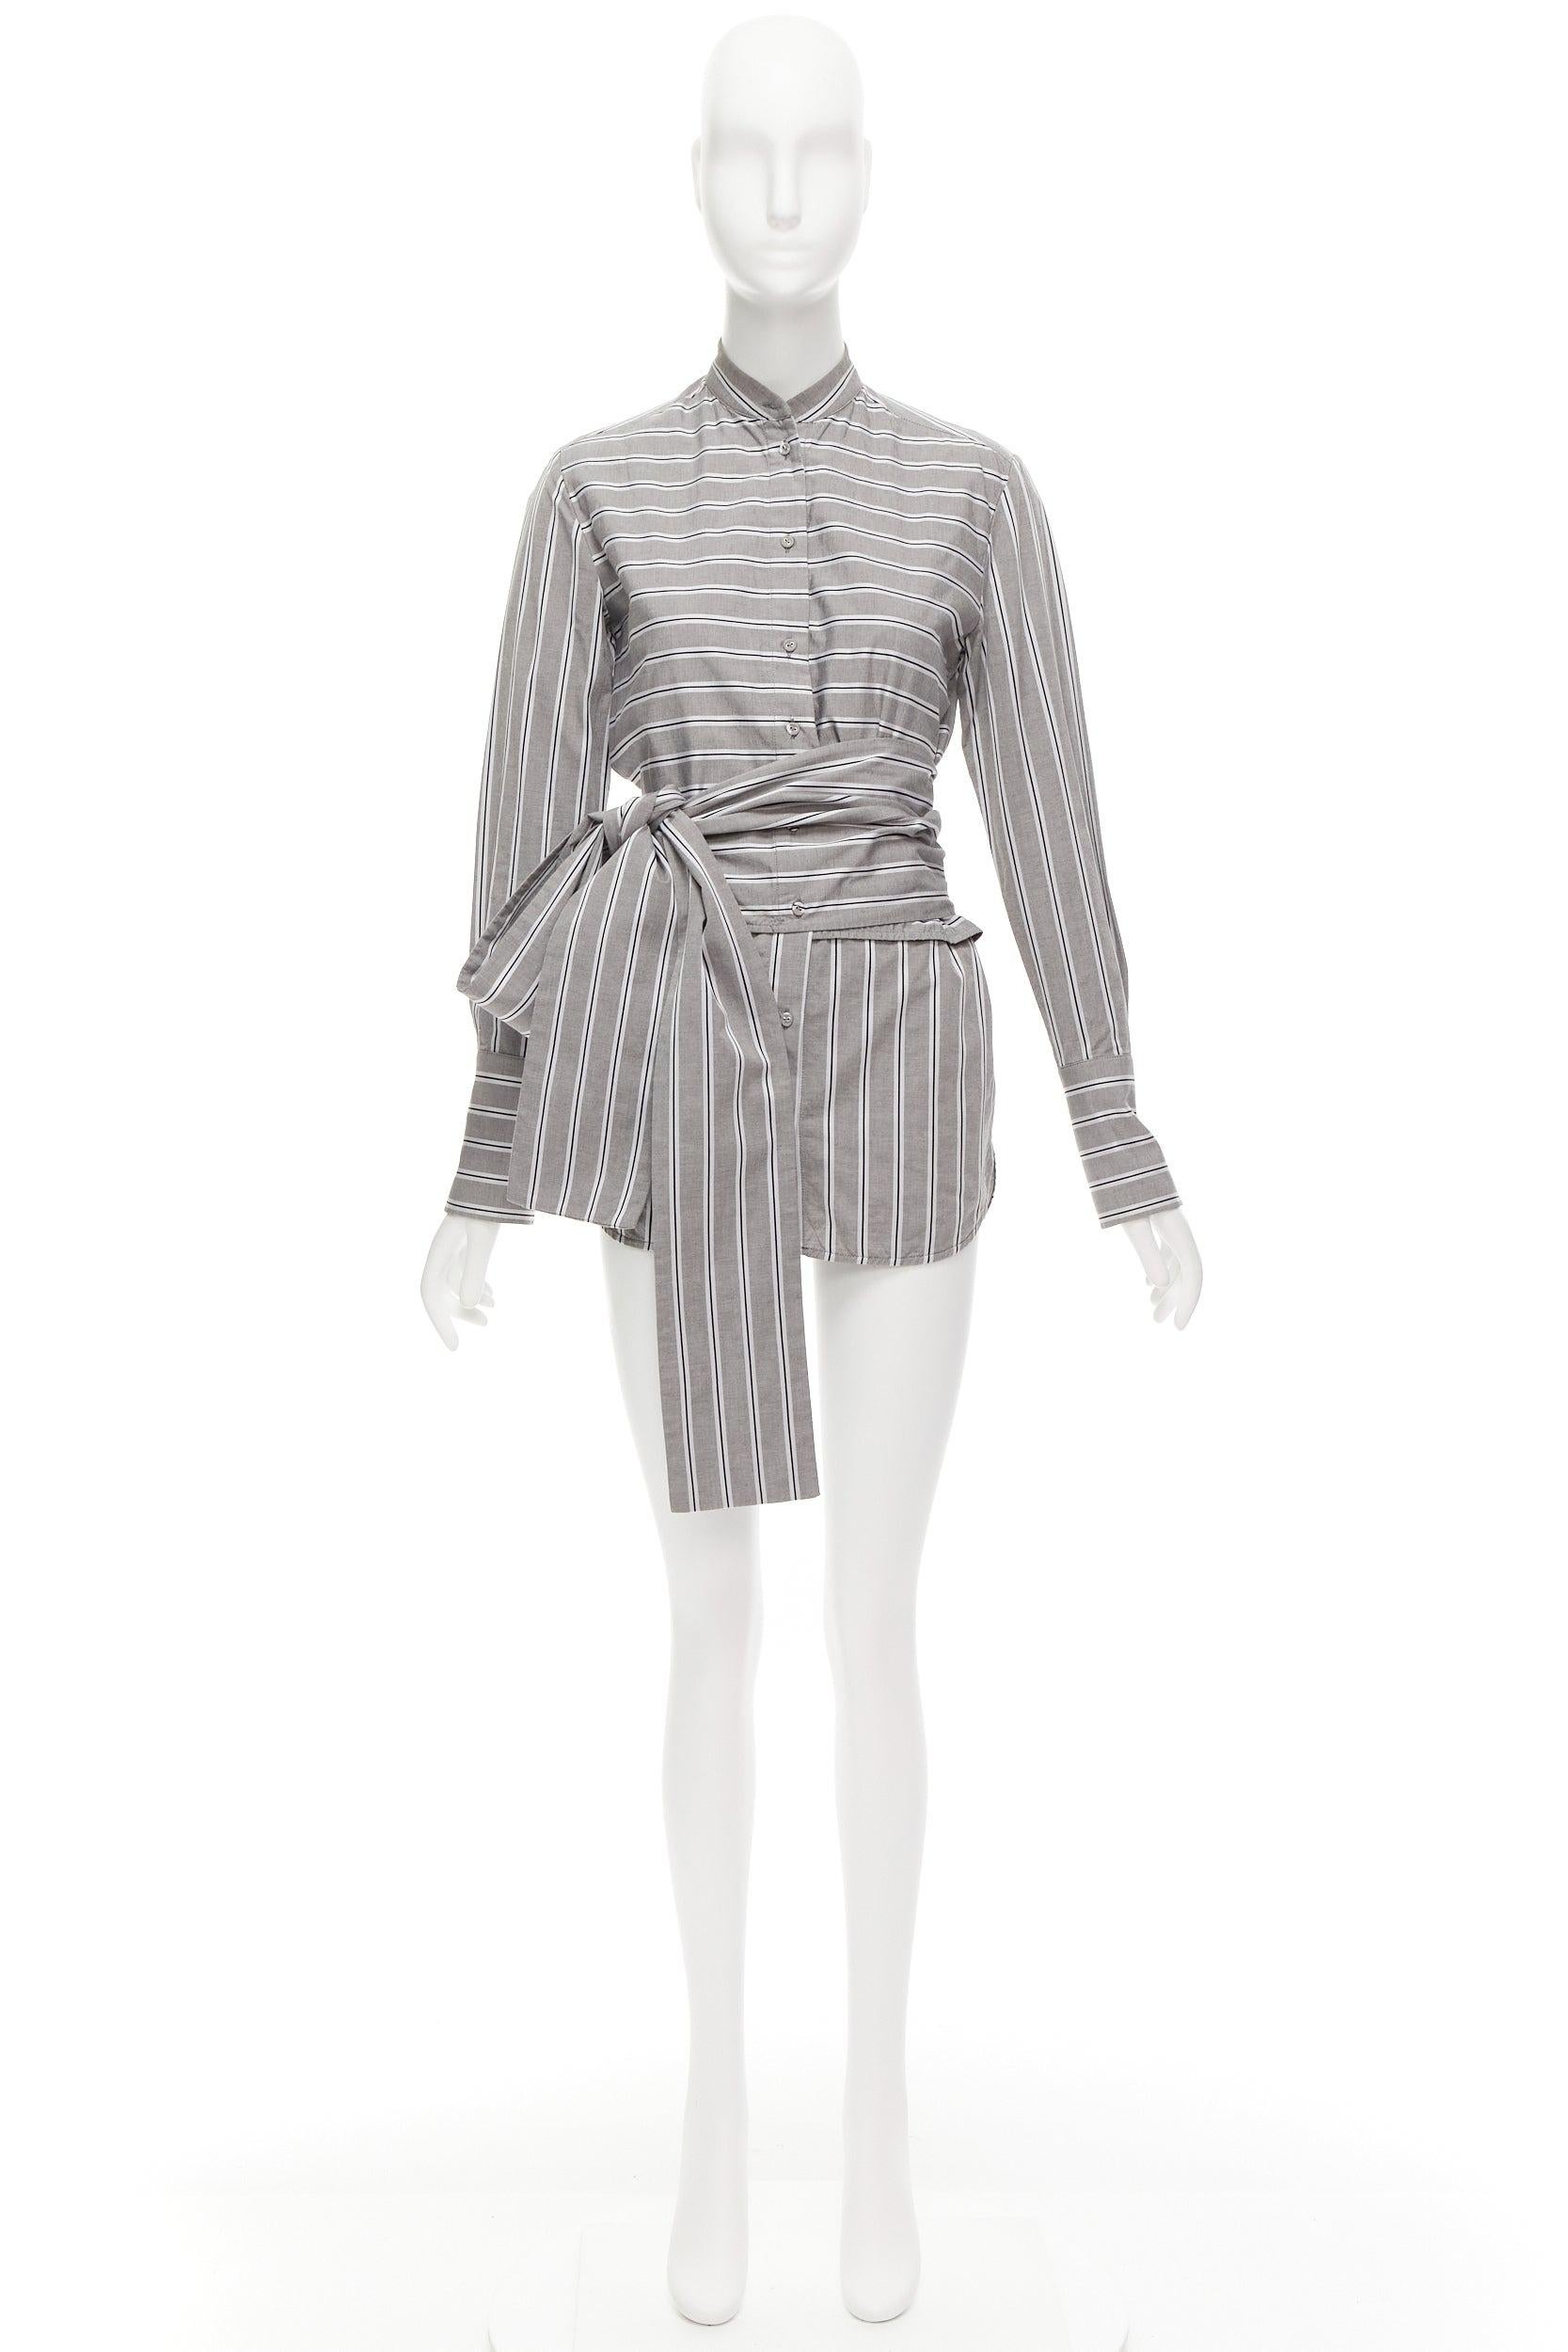 VVB VICTORIA BECKHAM grey striped cotton oversized sash belt tunic shirt UK6 XS For Sale 4